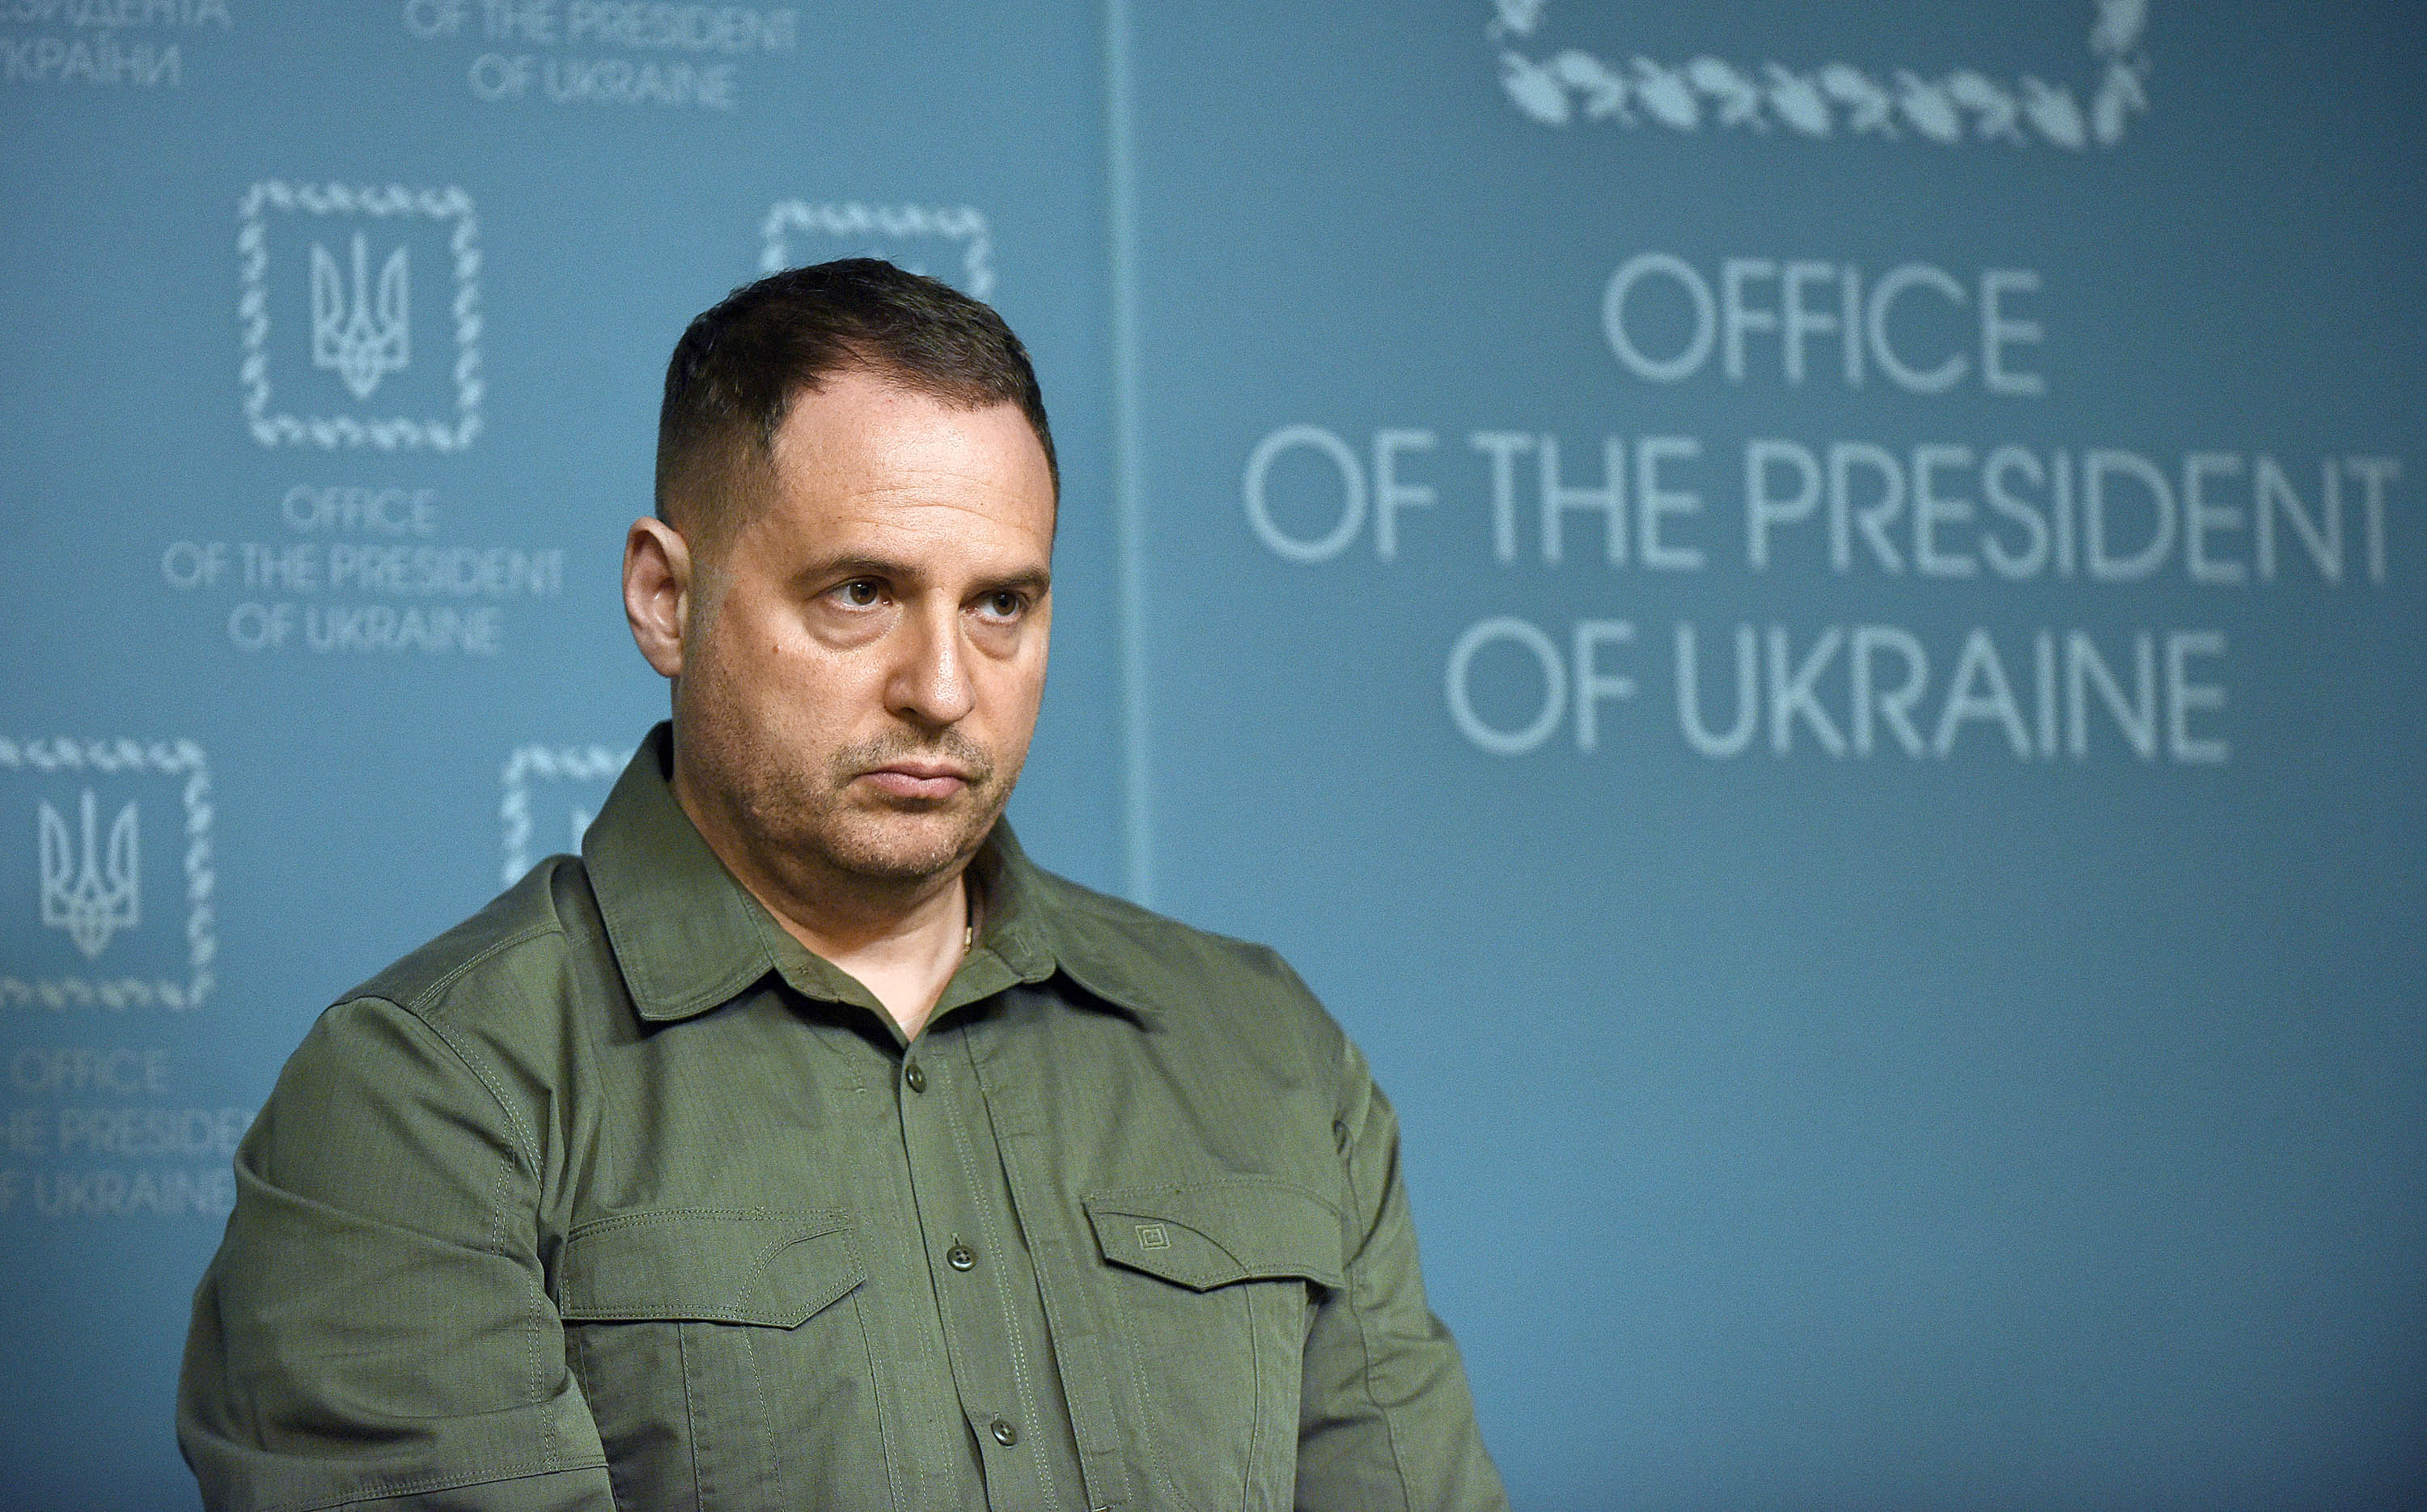 The head of the Ukrainian President’s office, Andrii Yermak, is pictured in Kyiv, Ukraine, in June.